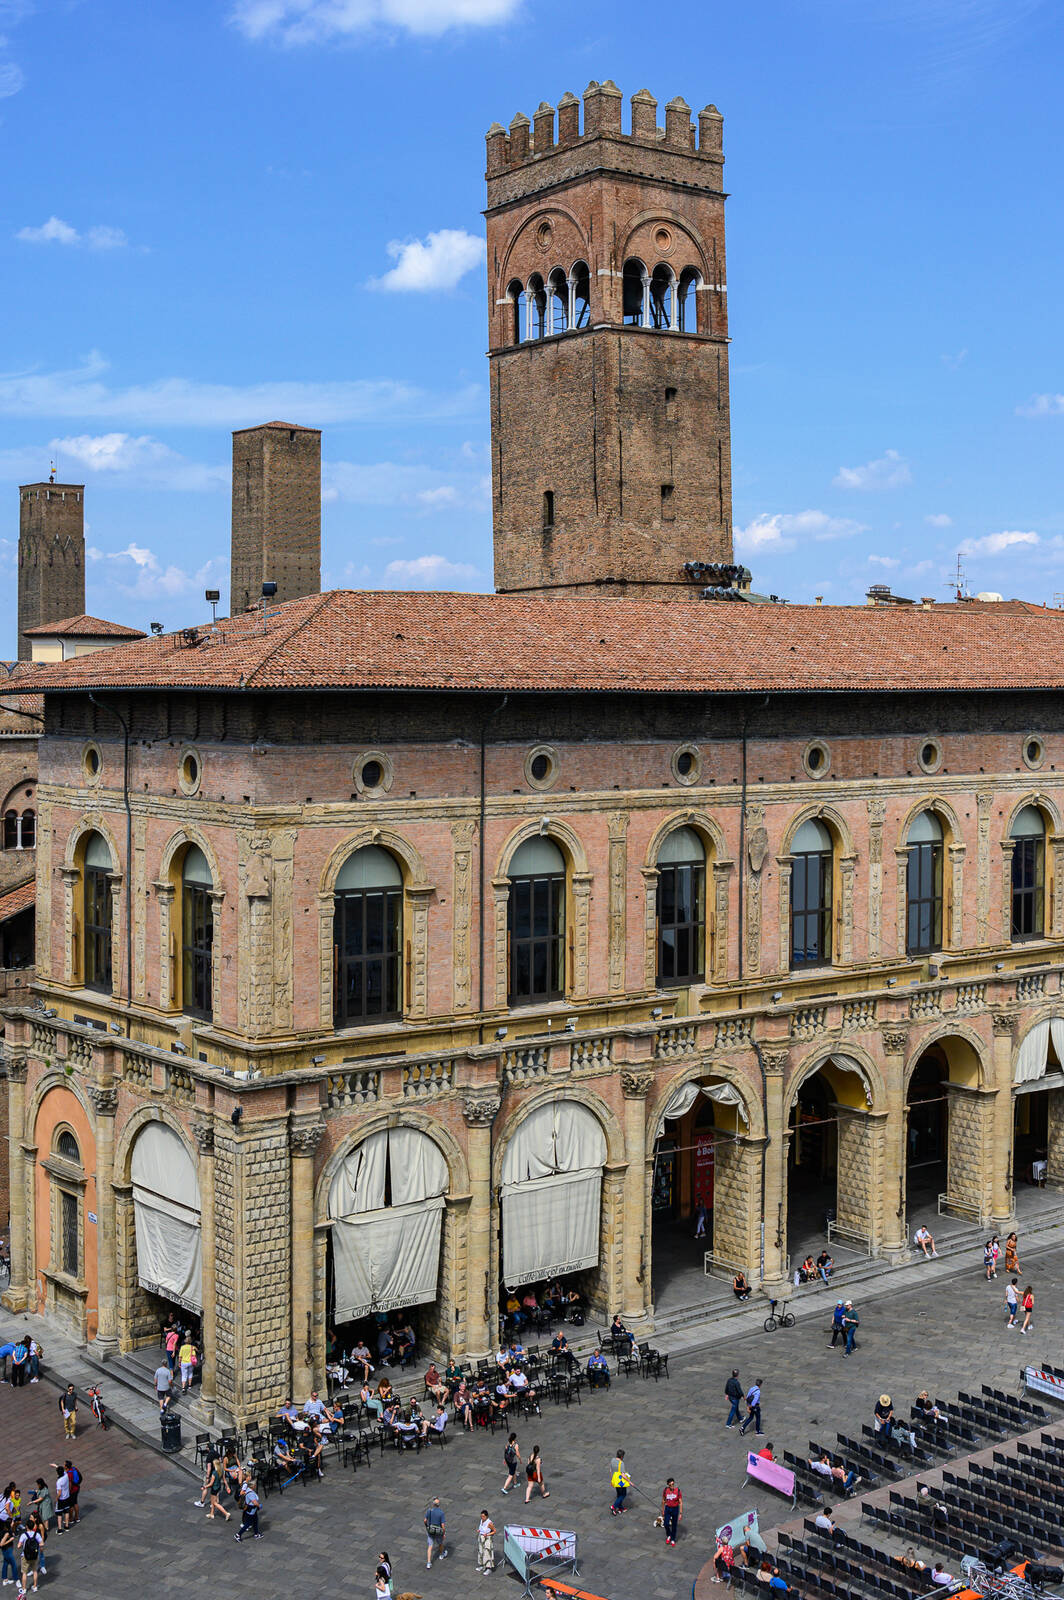 Image of Palazzo del Podestà and Palazzo re Enzo by Sue Wolfe